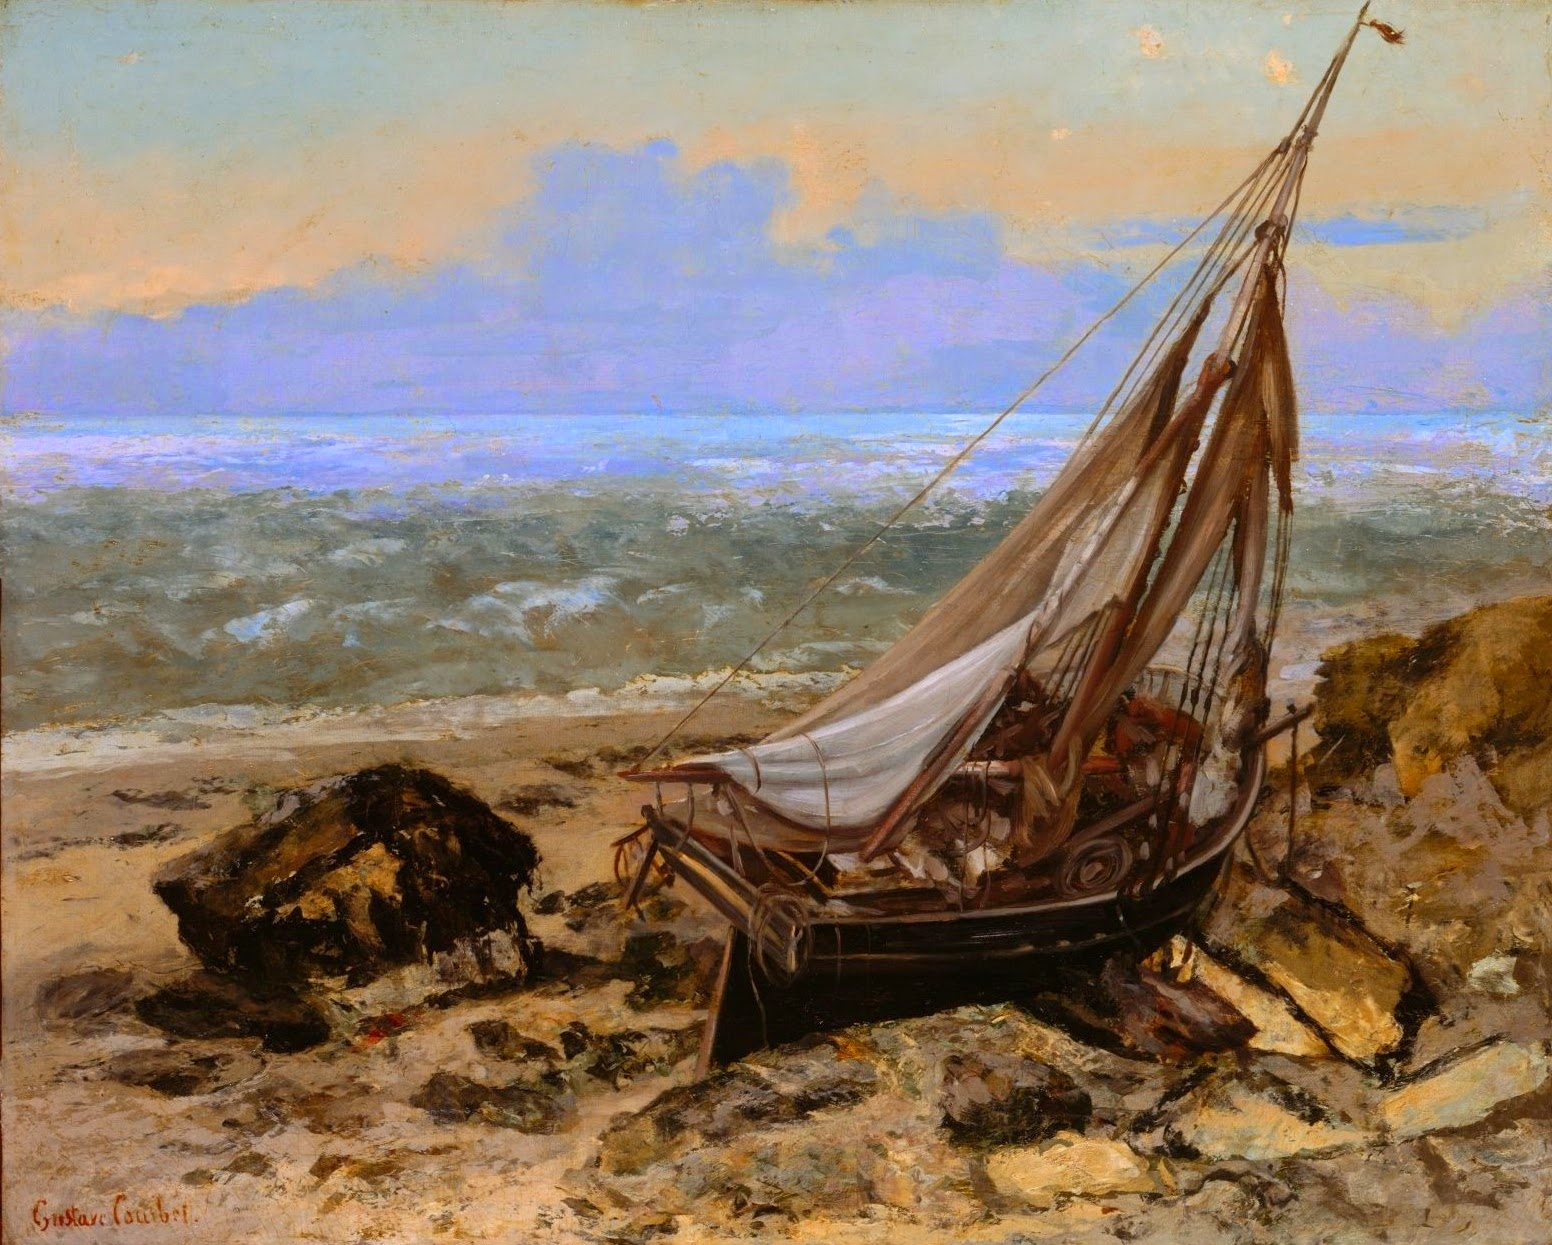 Gustave+Courbet-1819-1877 (33).jpg